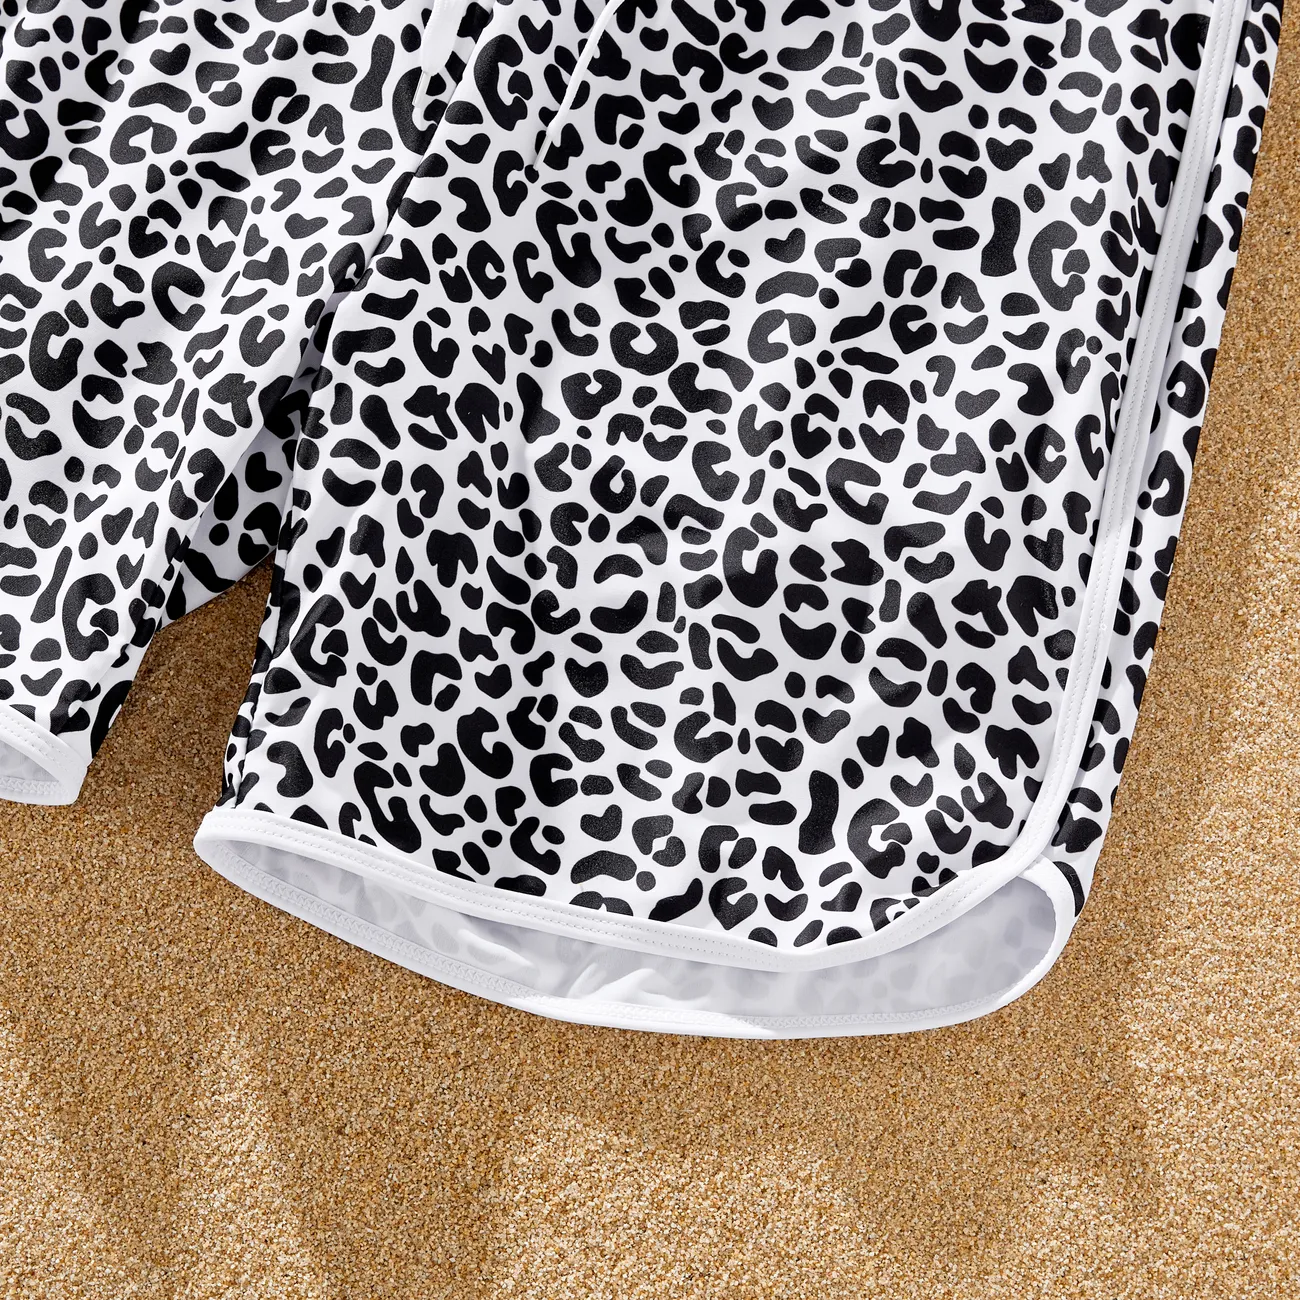 Family Matching Leopard Printed Swim Trunks or Twist Knot High-Waist Swimsuit BlackandWhite big image 1